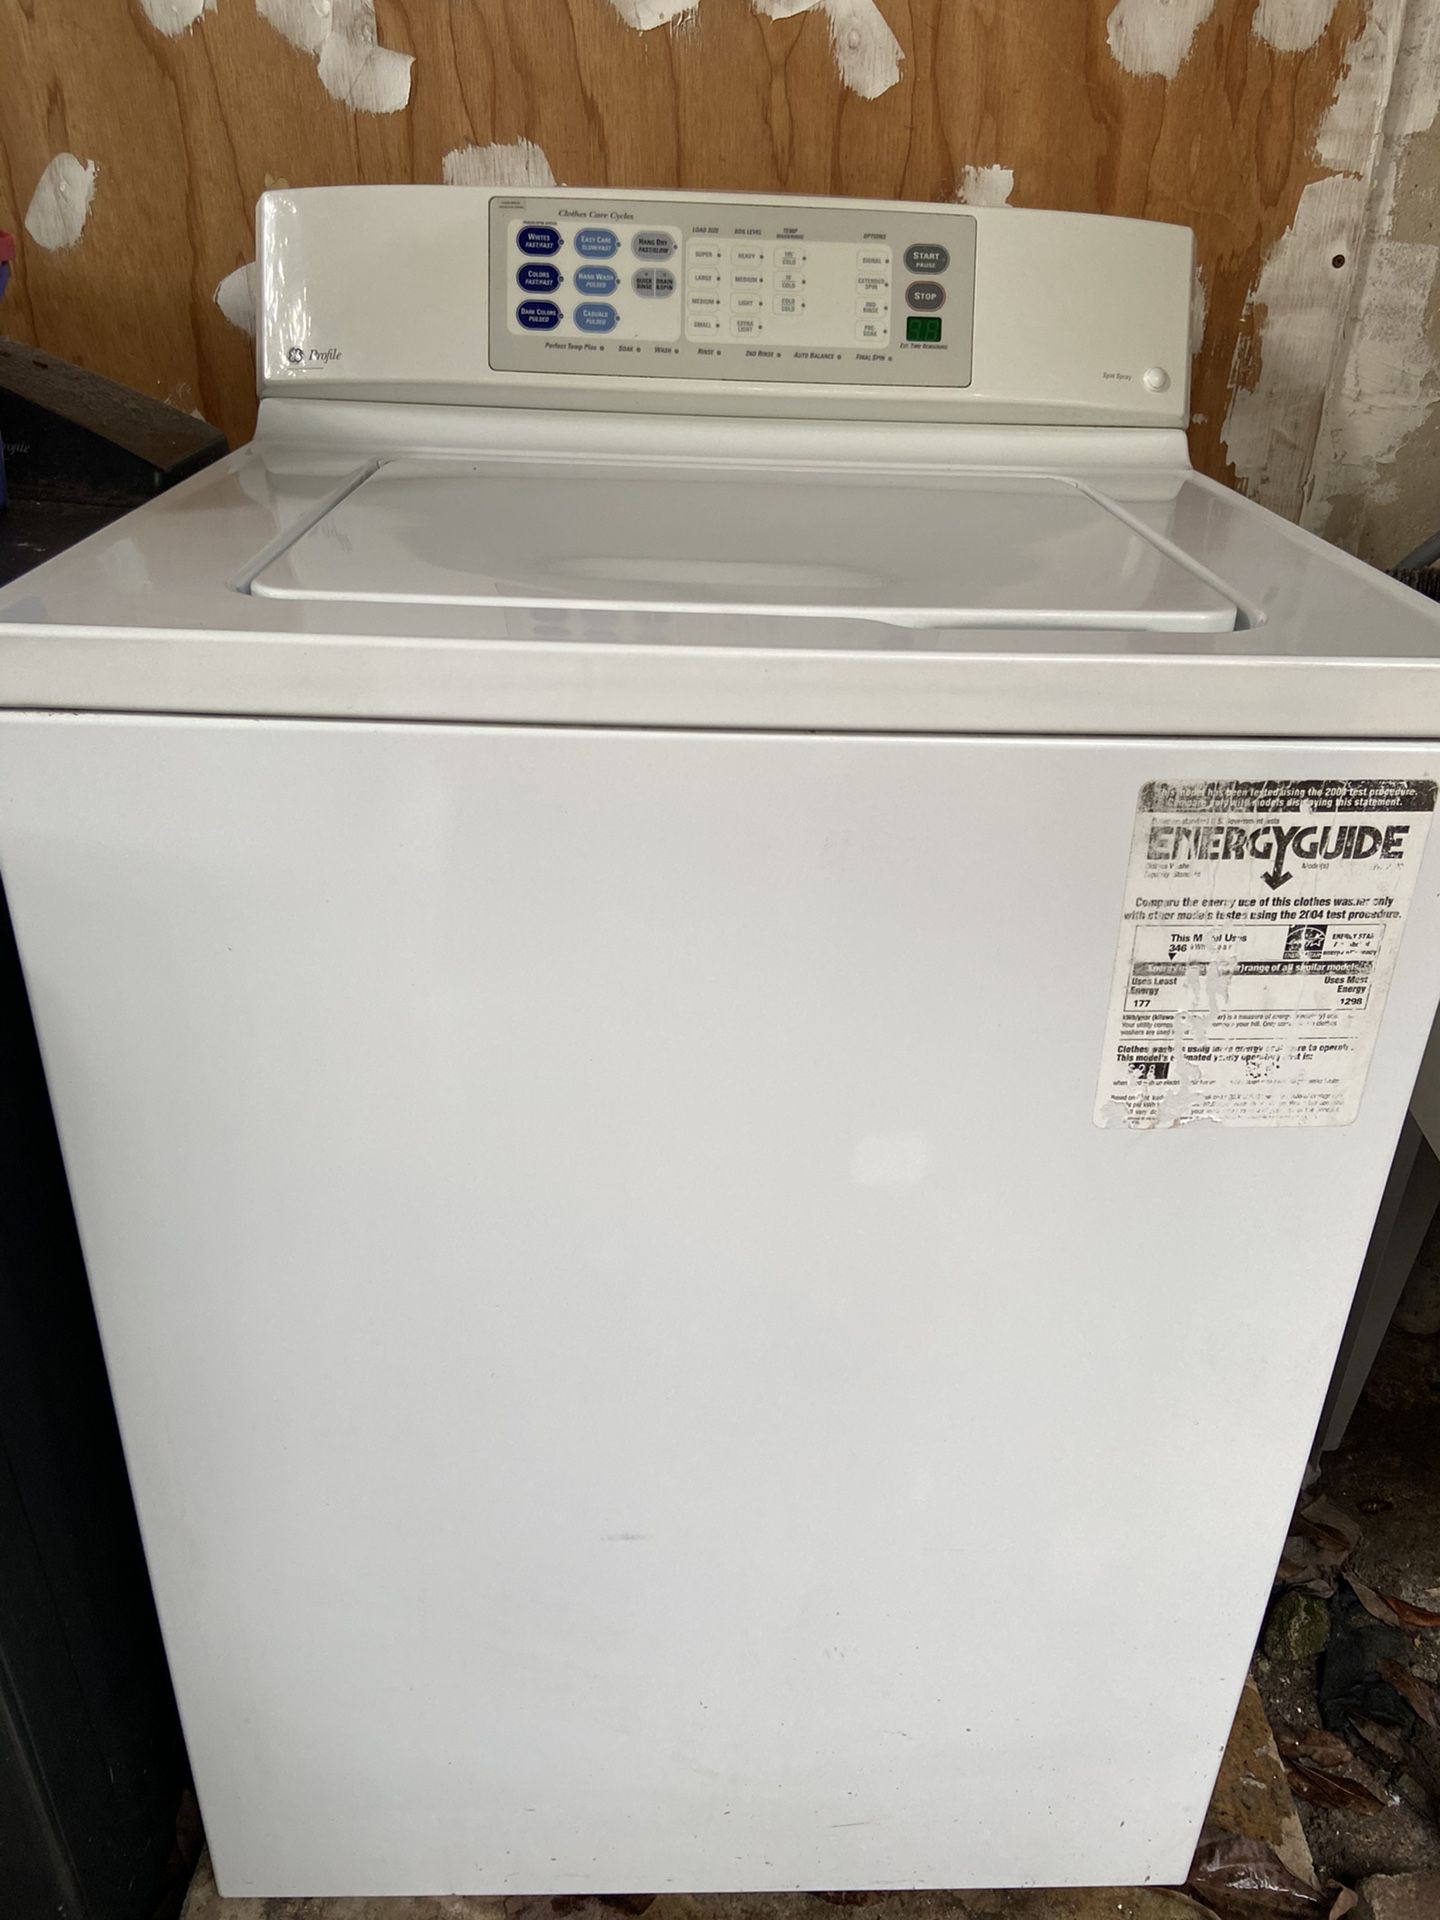 GE Profile Washer/Dryer Set